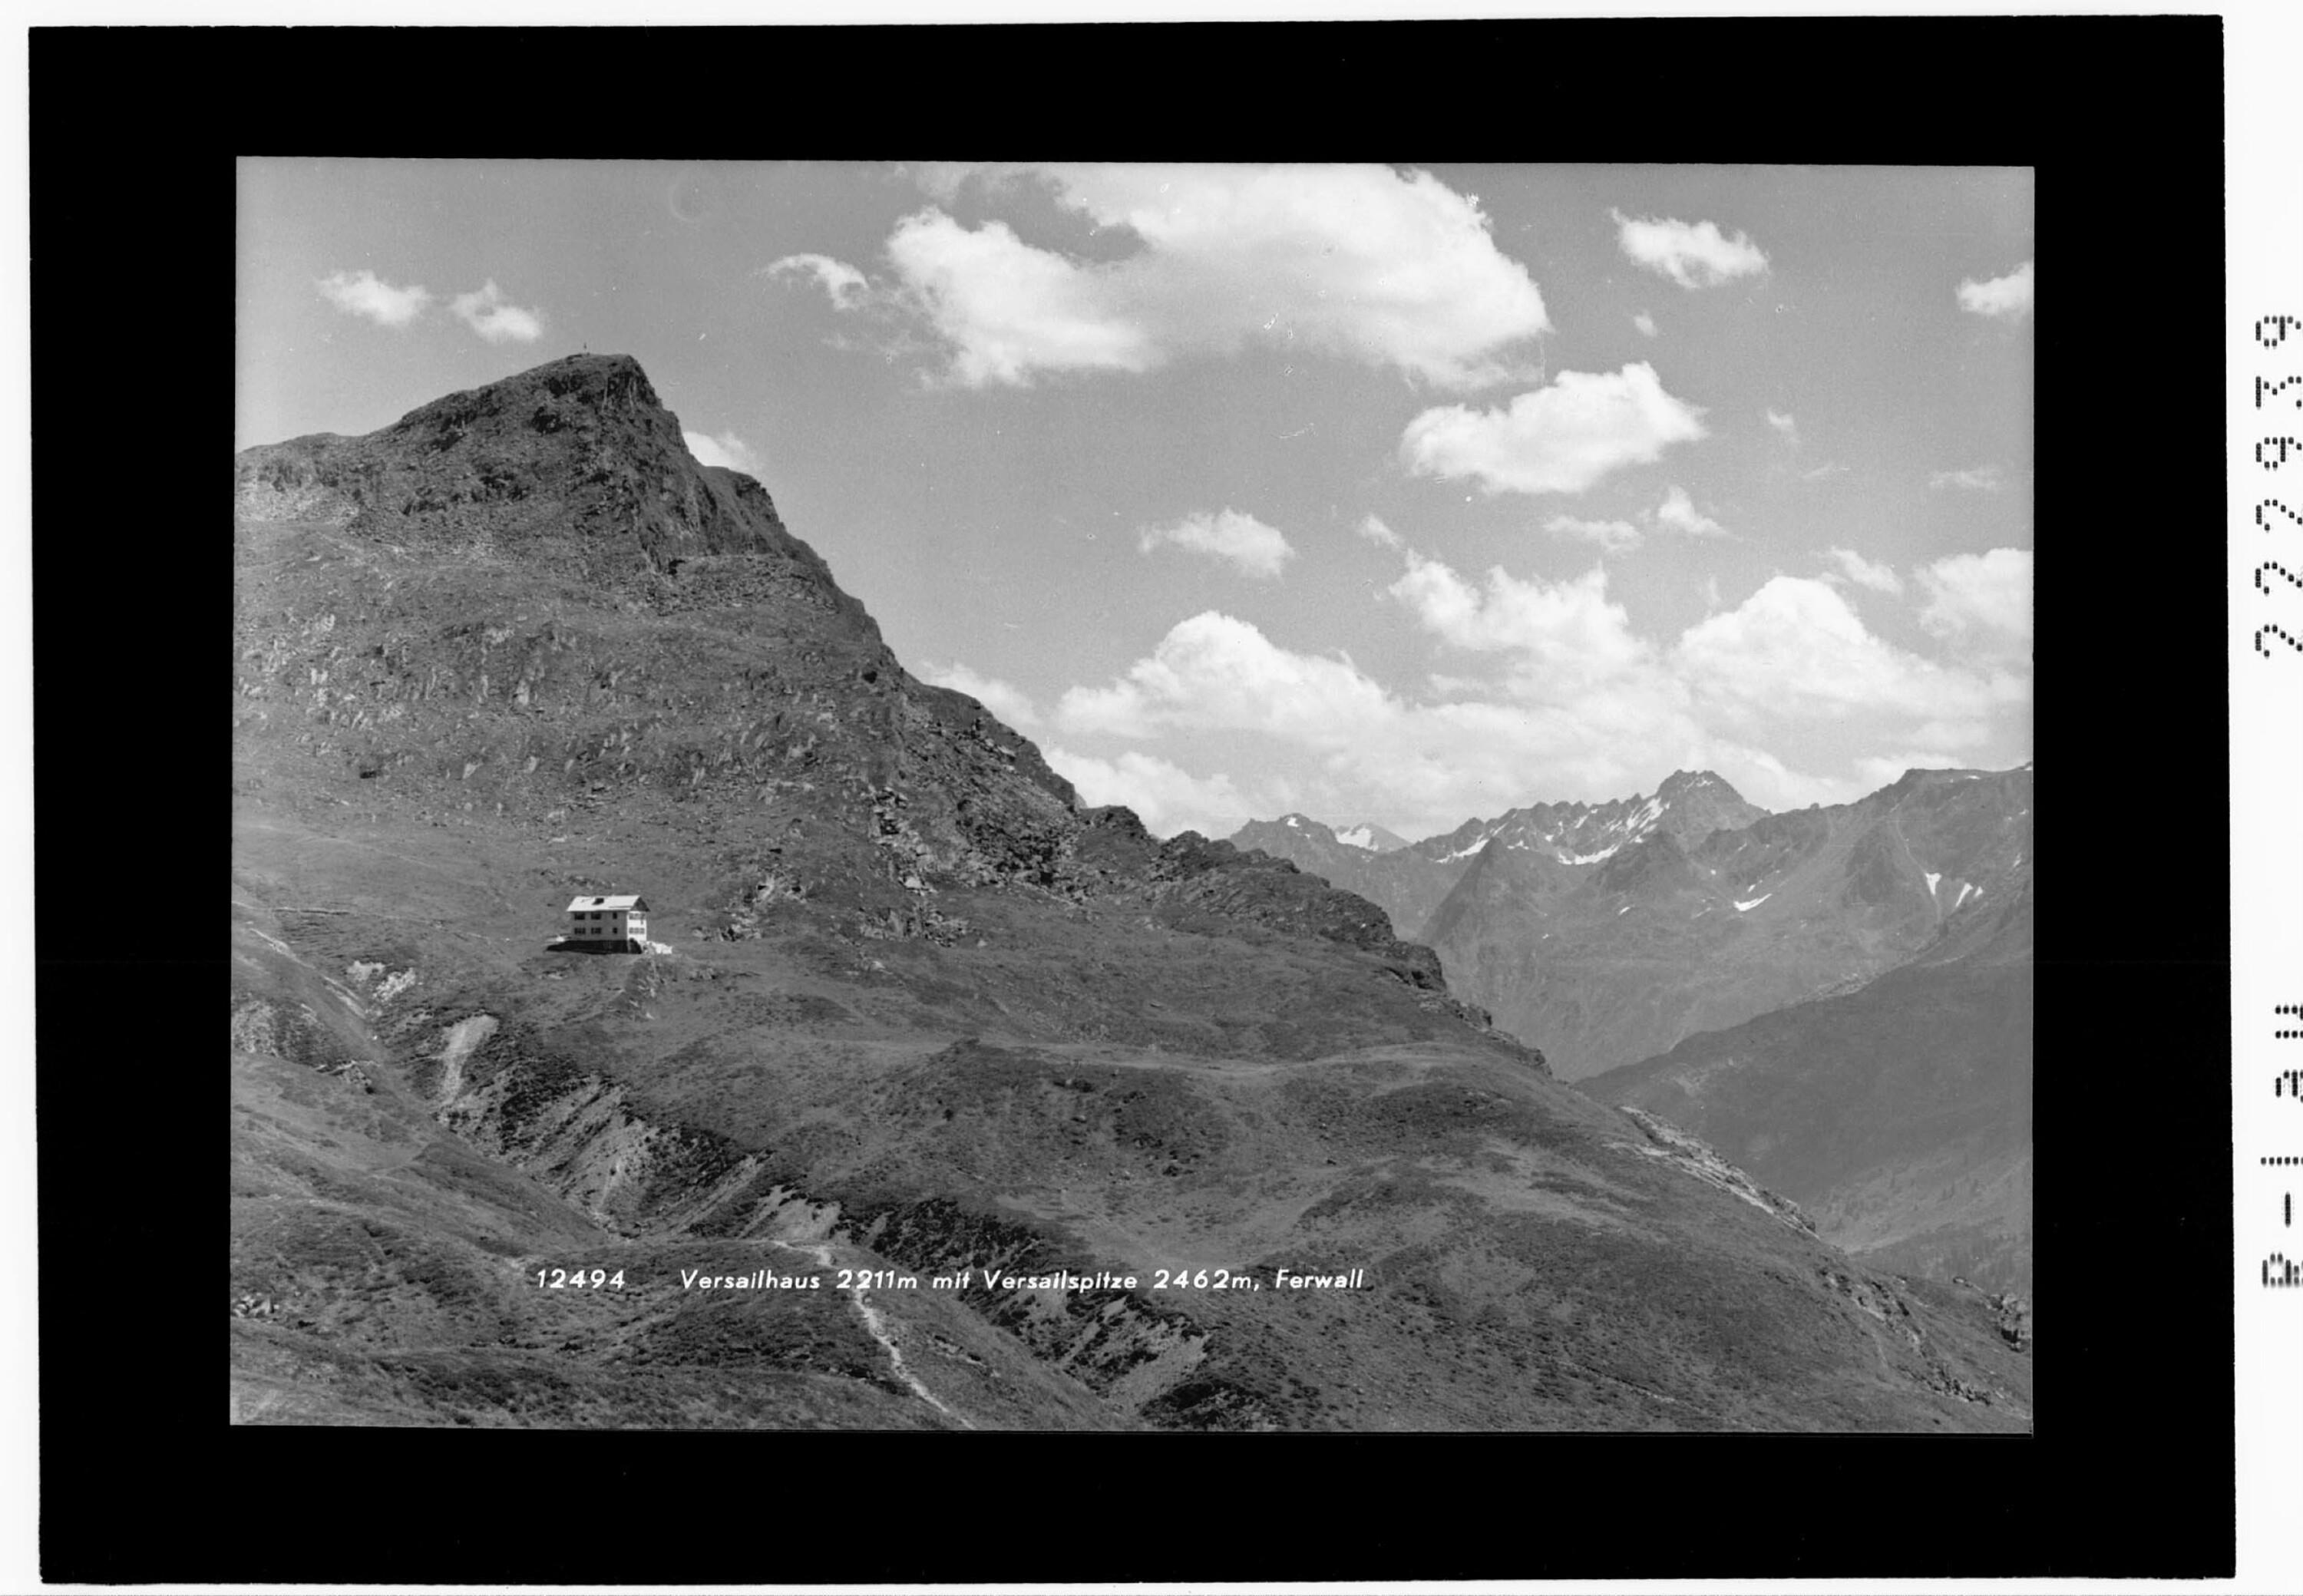 Versailhaus 2211 m mit Versailspitze 2462 m></div>


    <hr>
    <div class=